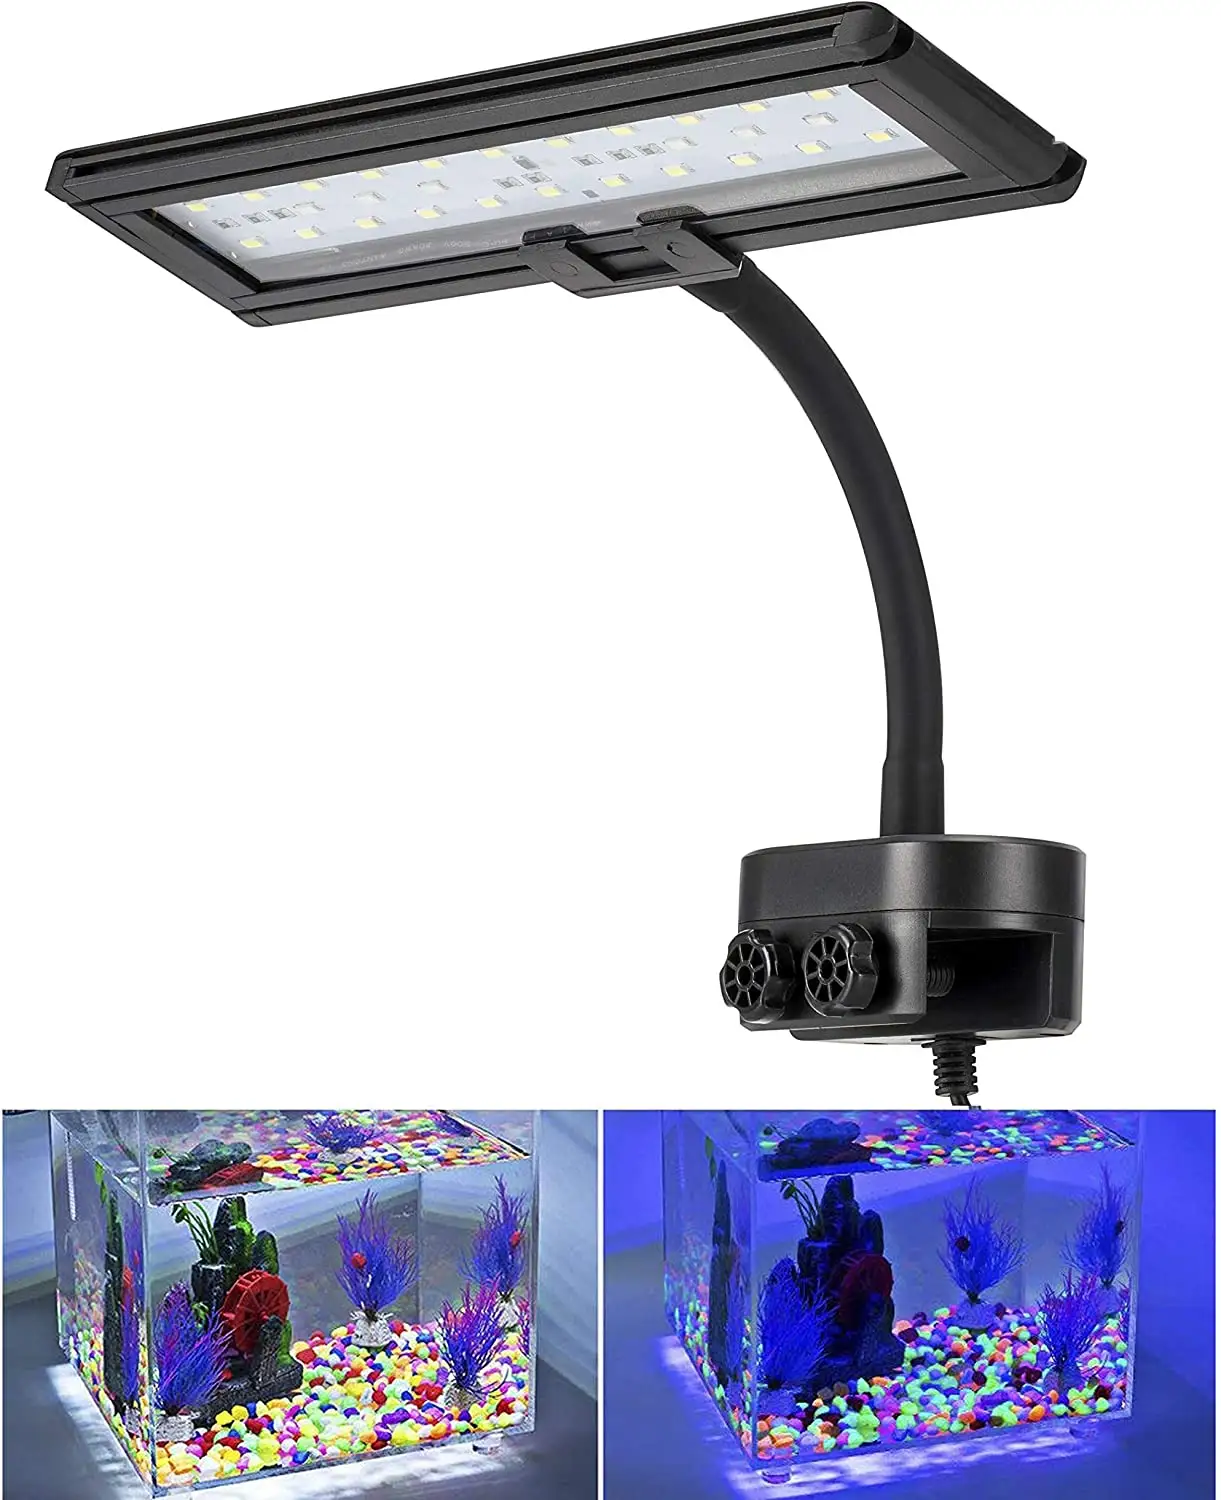 Hygger Blue White LED Aquarium Light Gooseneck Clamp LED light for Saltwater Freshwater Fish Tank, Aquarium led lighting